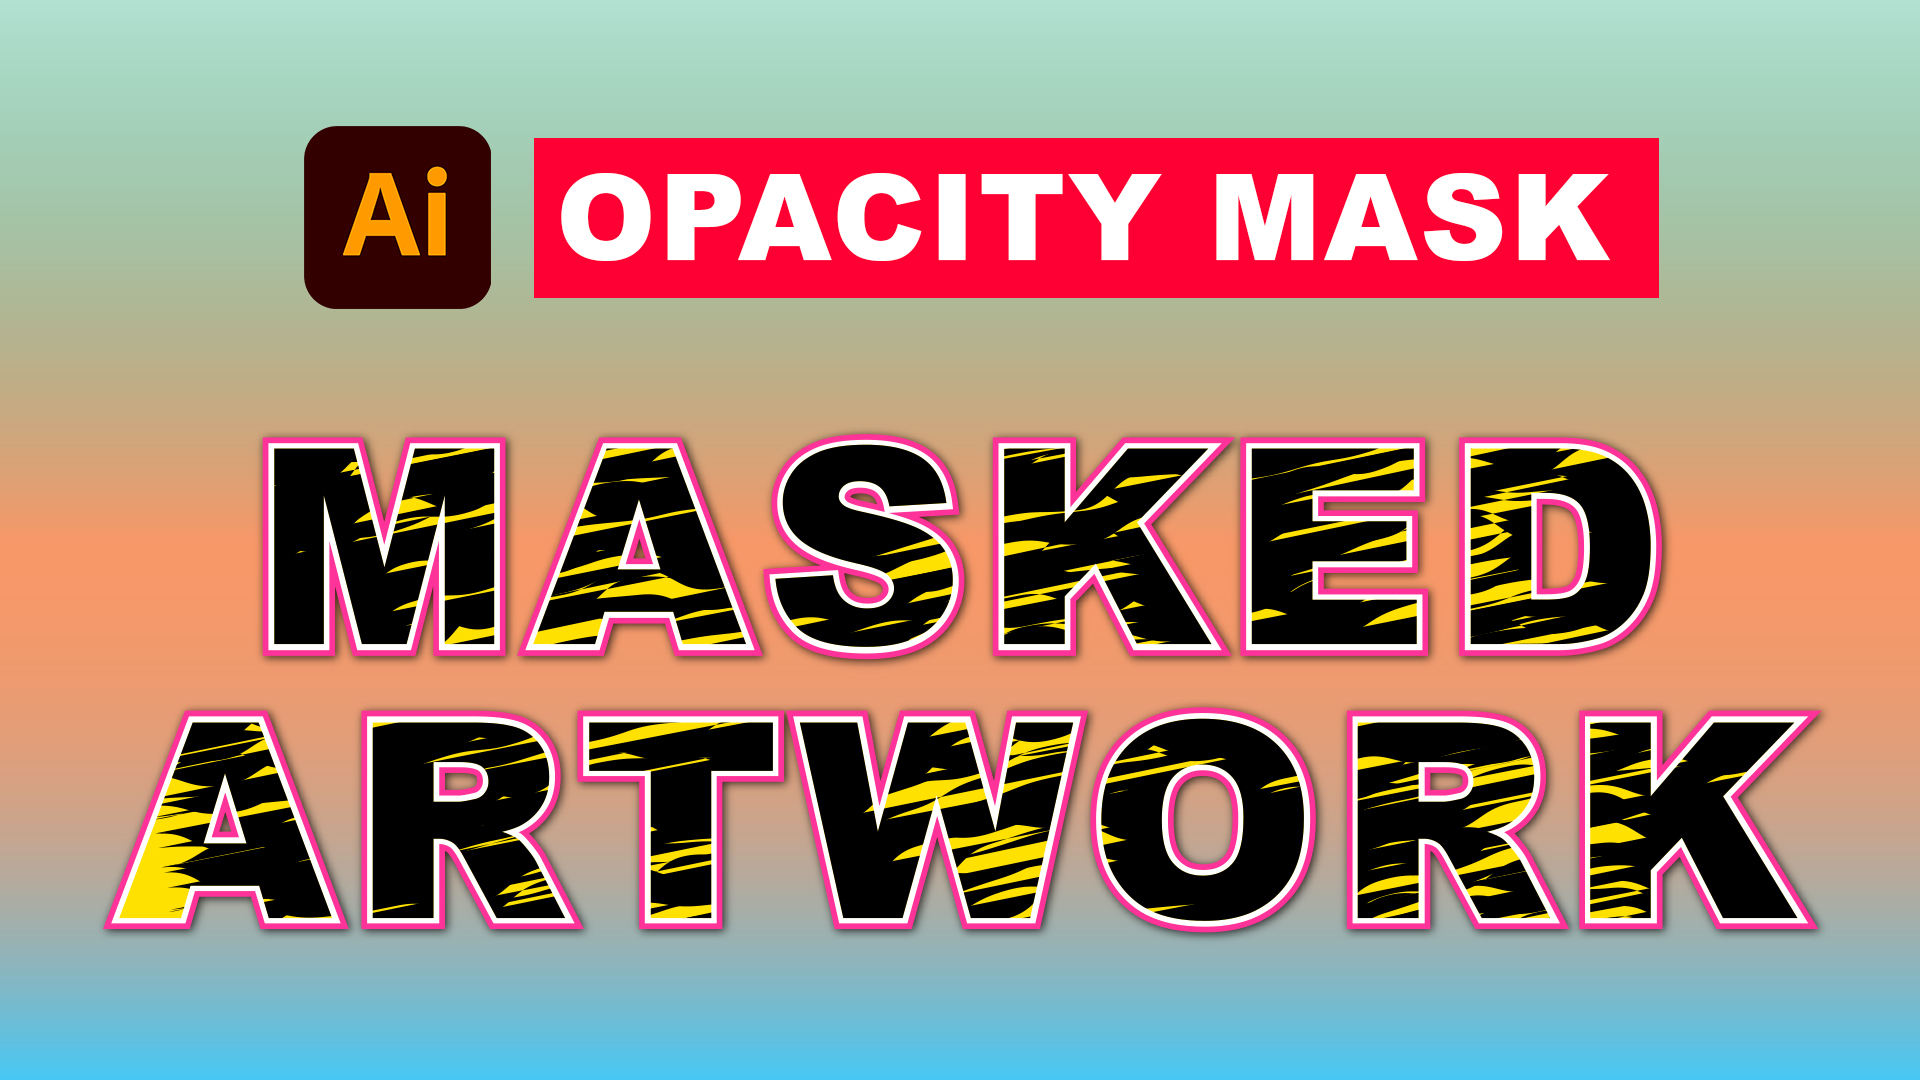 Opacity Mask Illustrator